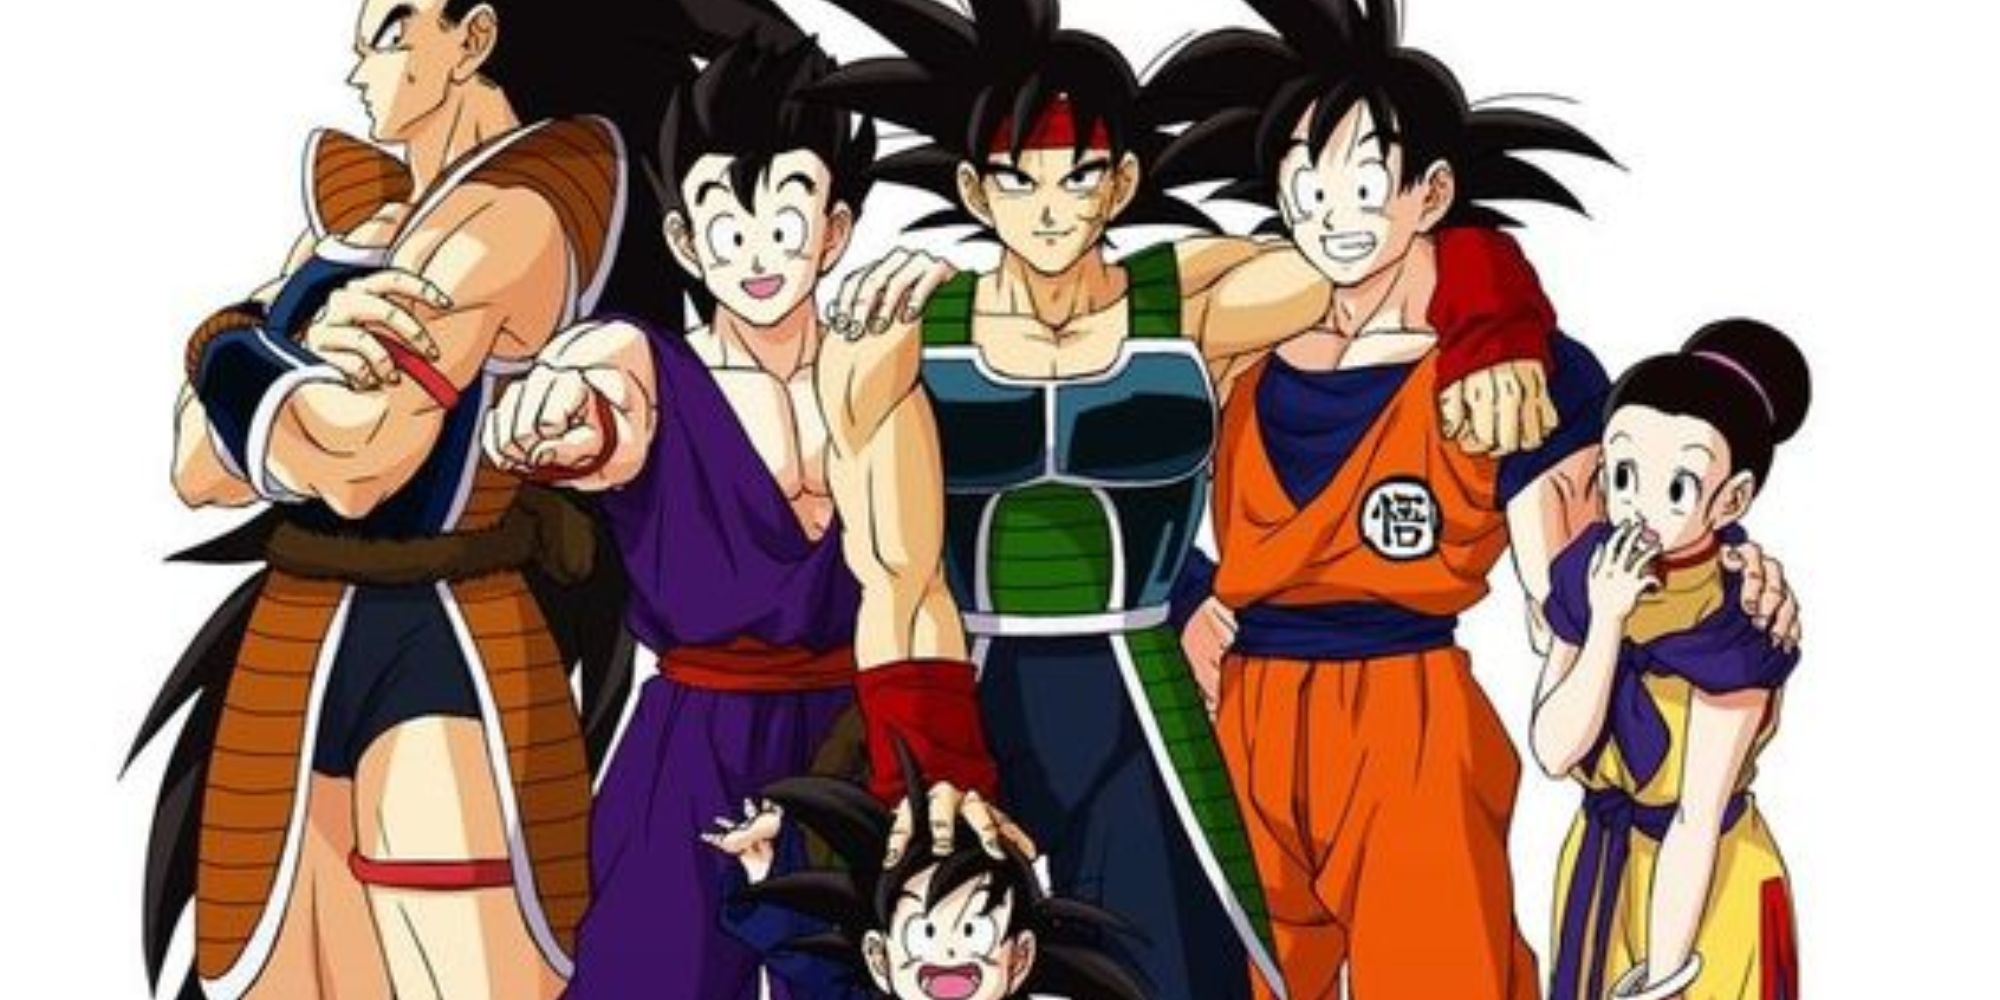 Bardock, Gohan, Raditz, Goku, Chi Chi, and Goten together